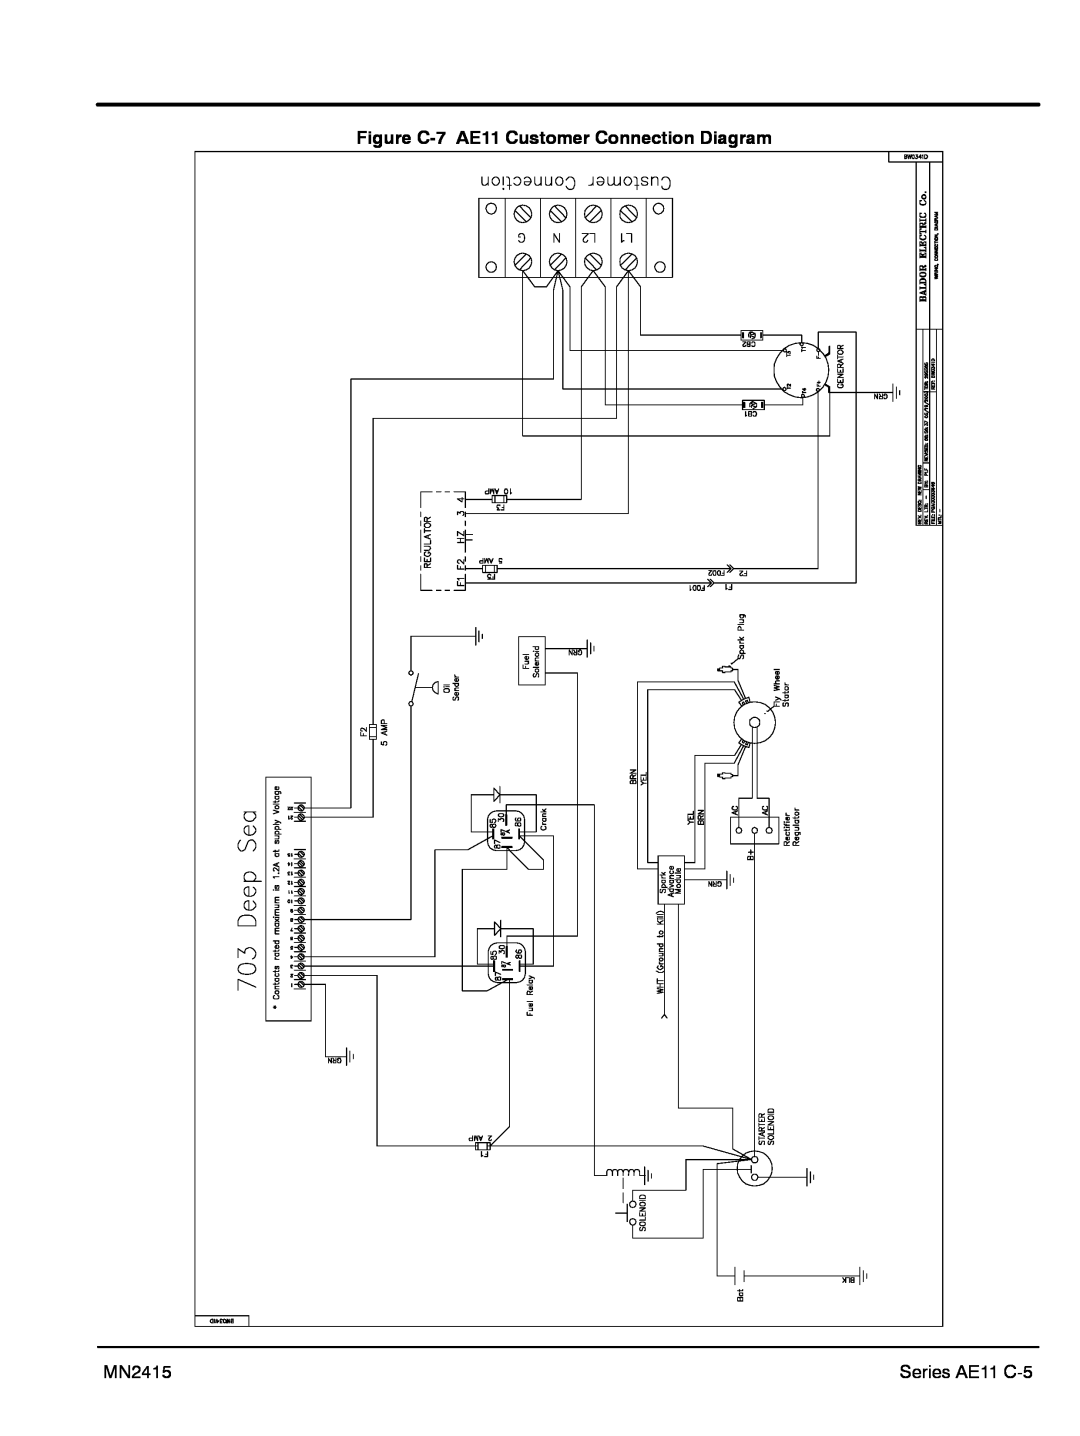 Baldor AE10, AE25, AE8 manual Figure C-7 AE11 Customer Connection Diagram, MN2415, Series AE11 C-5 